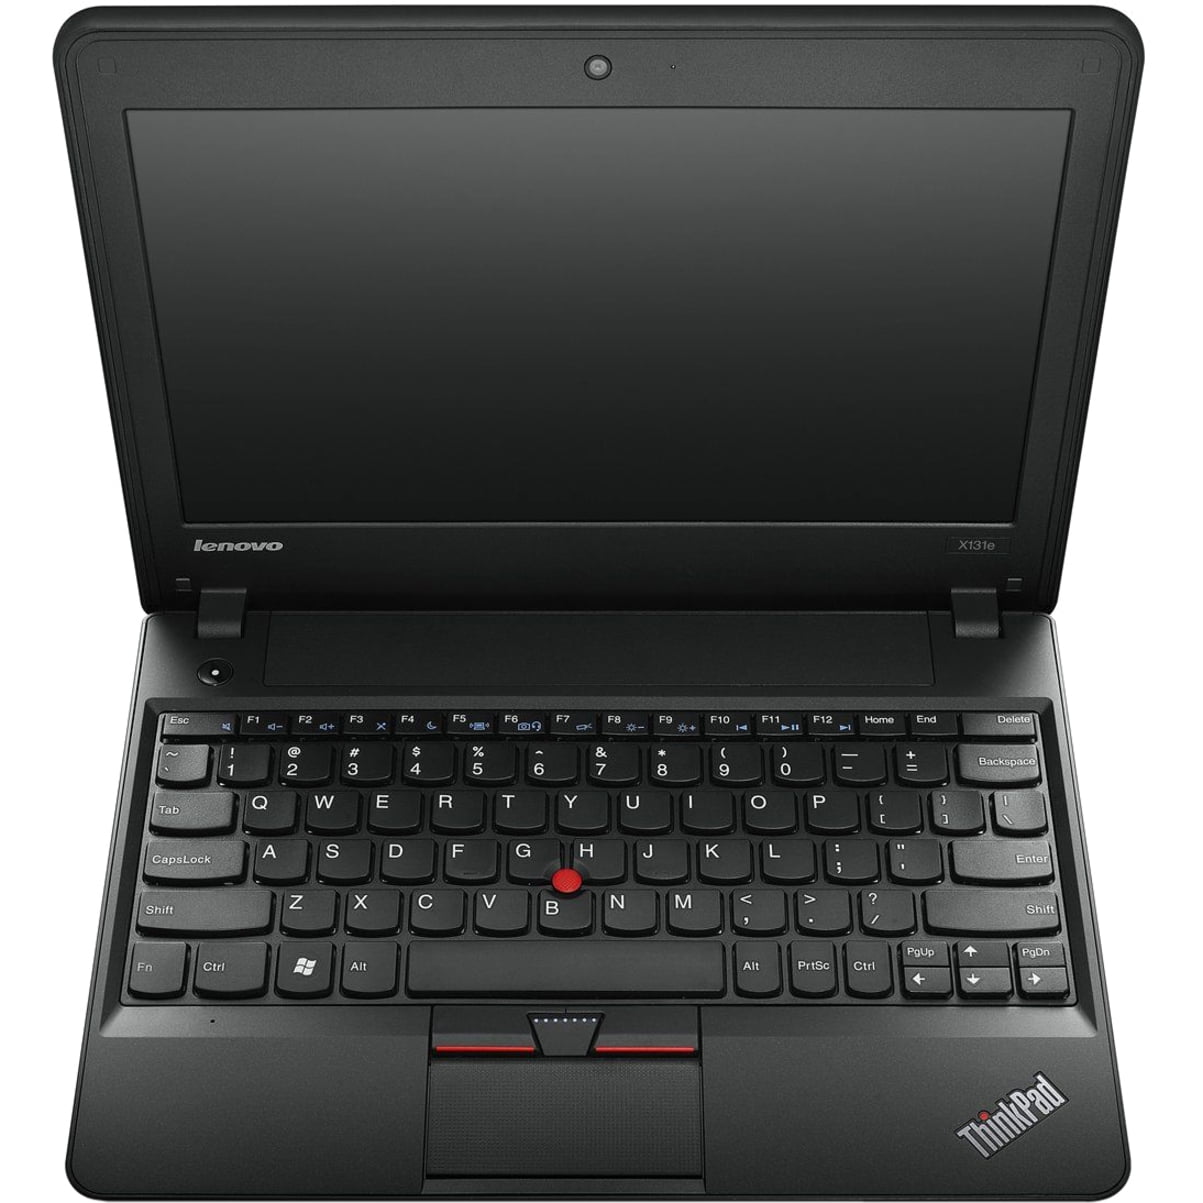 Lenovo ThinkPad 11.6" Laptop, AMD E-Series E-300, 2GB RAM, 320GB HD, Windows 7 Home Premium, 337229U